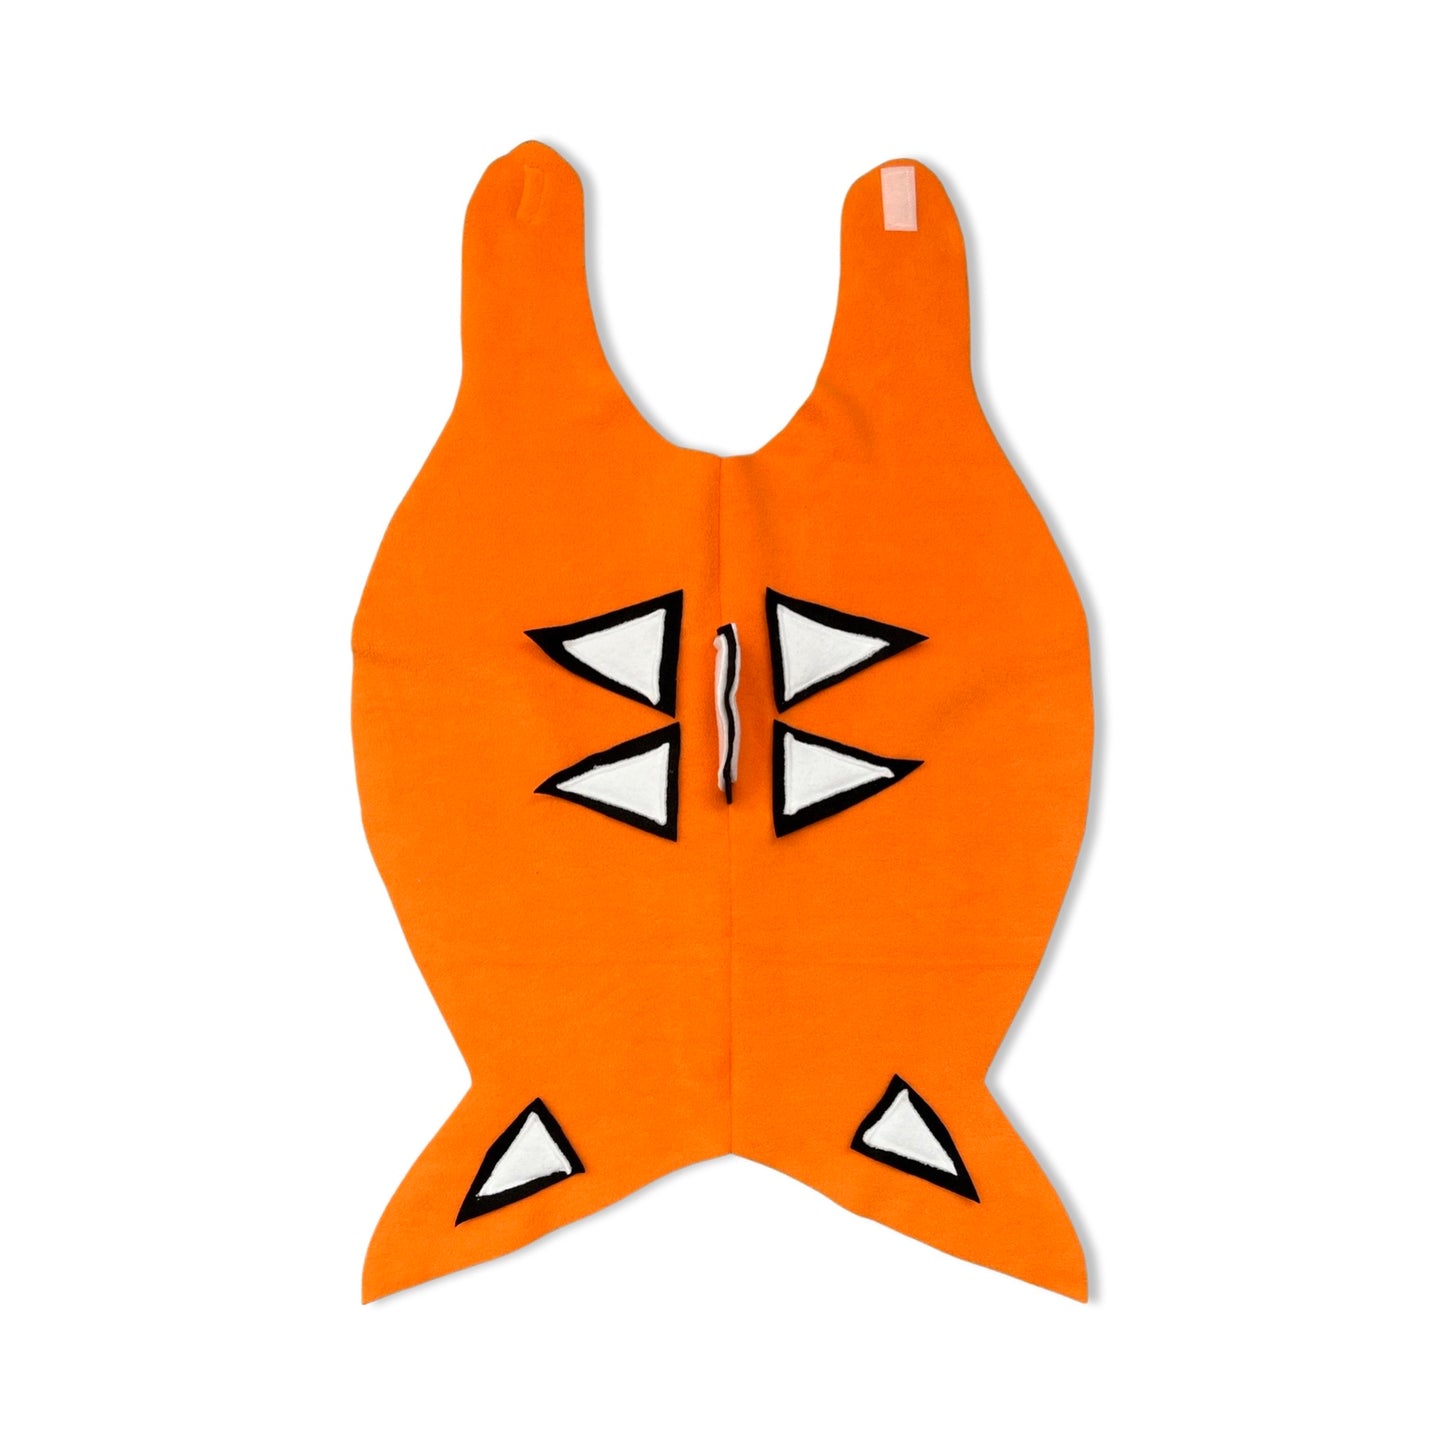 Fish Cape, Kids Halloween Costume or Dress Up Cape- 4 colors